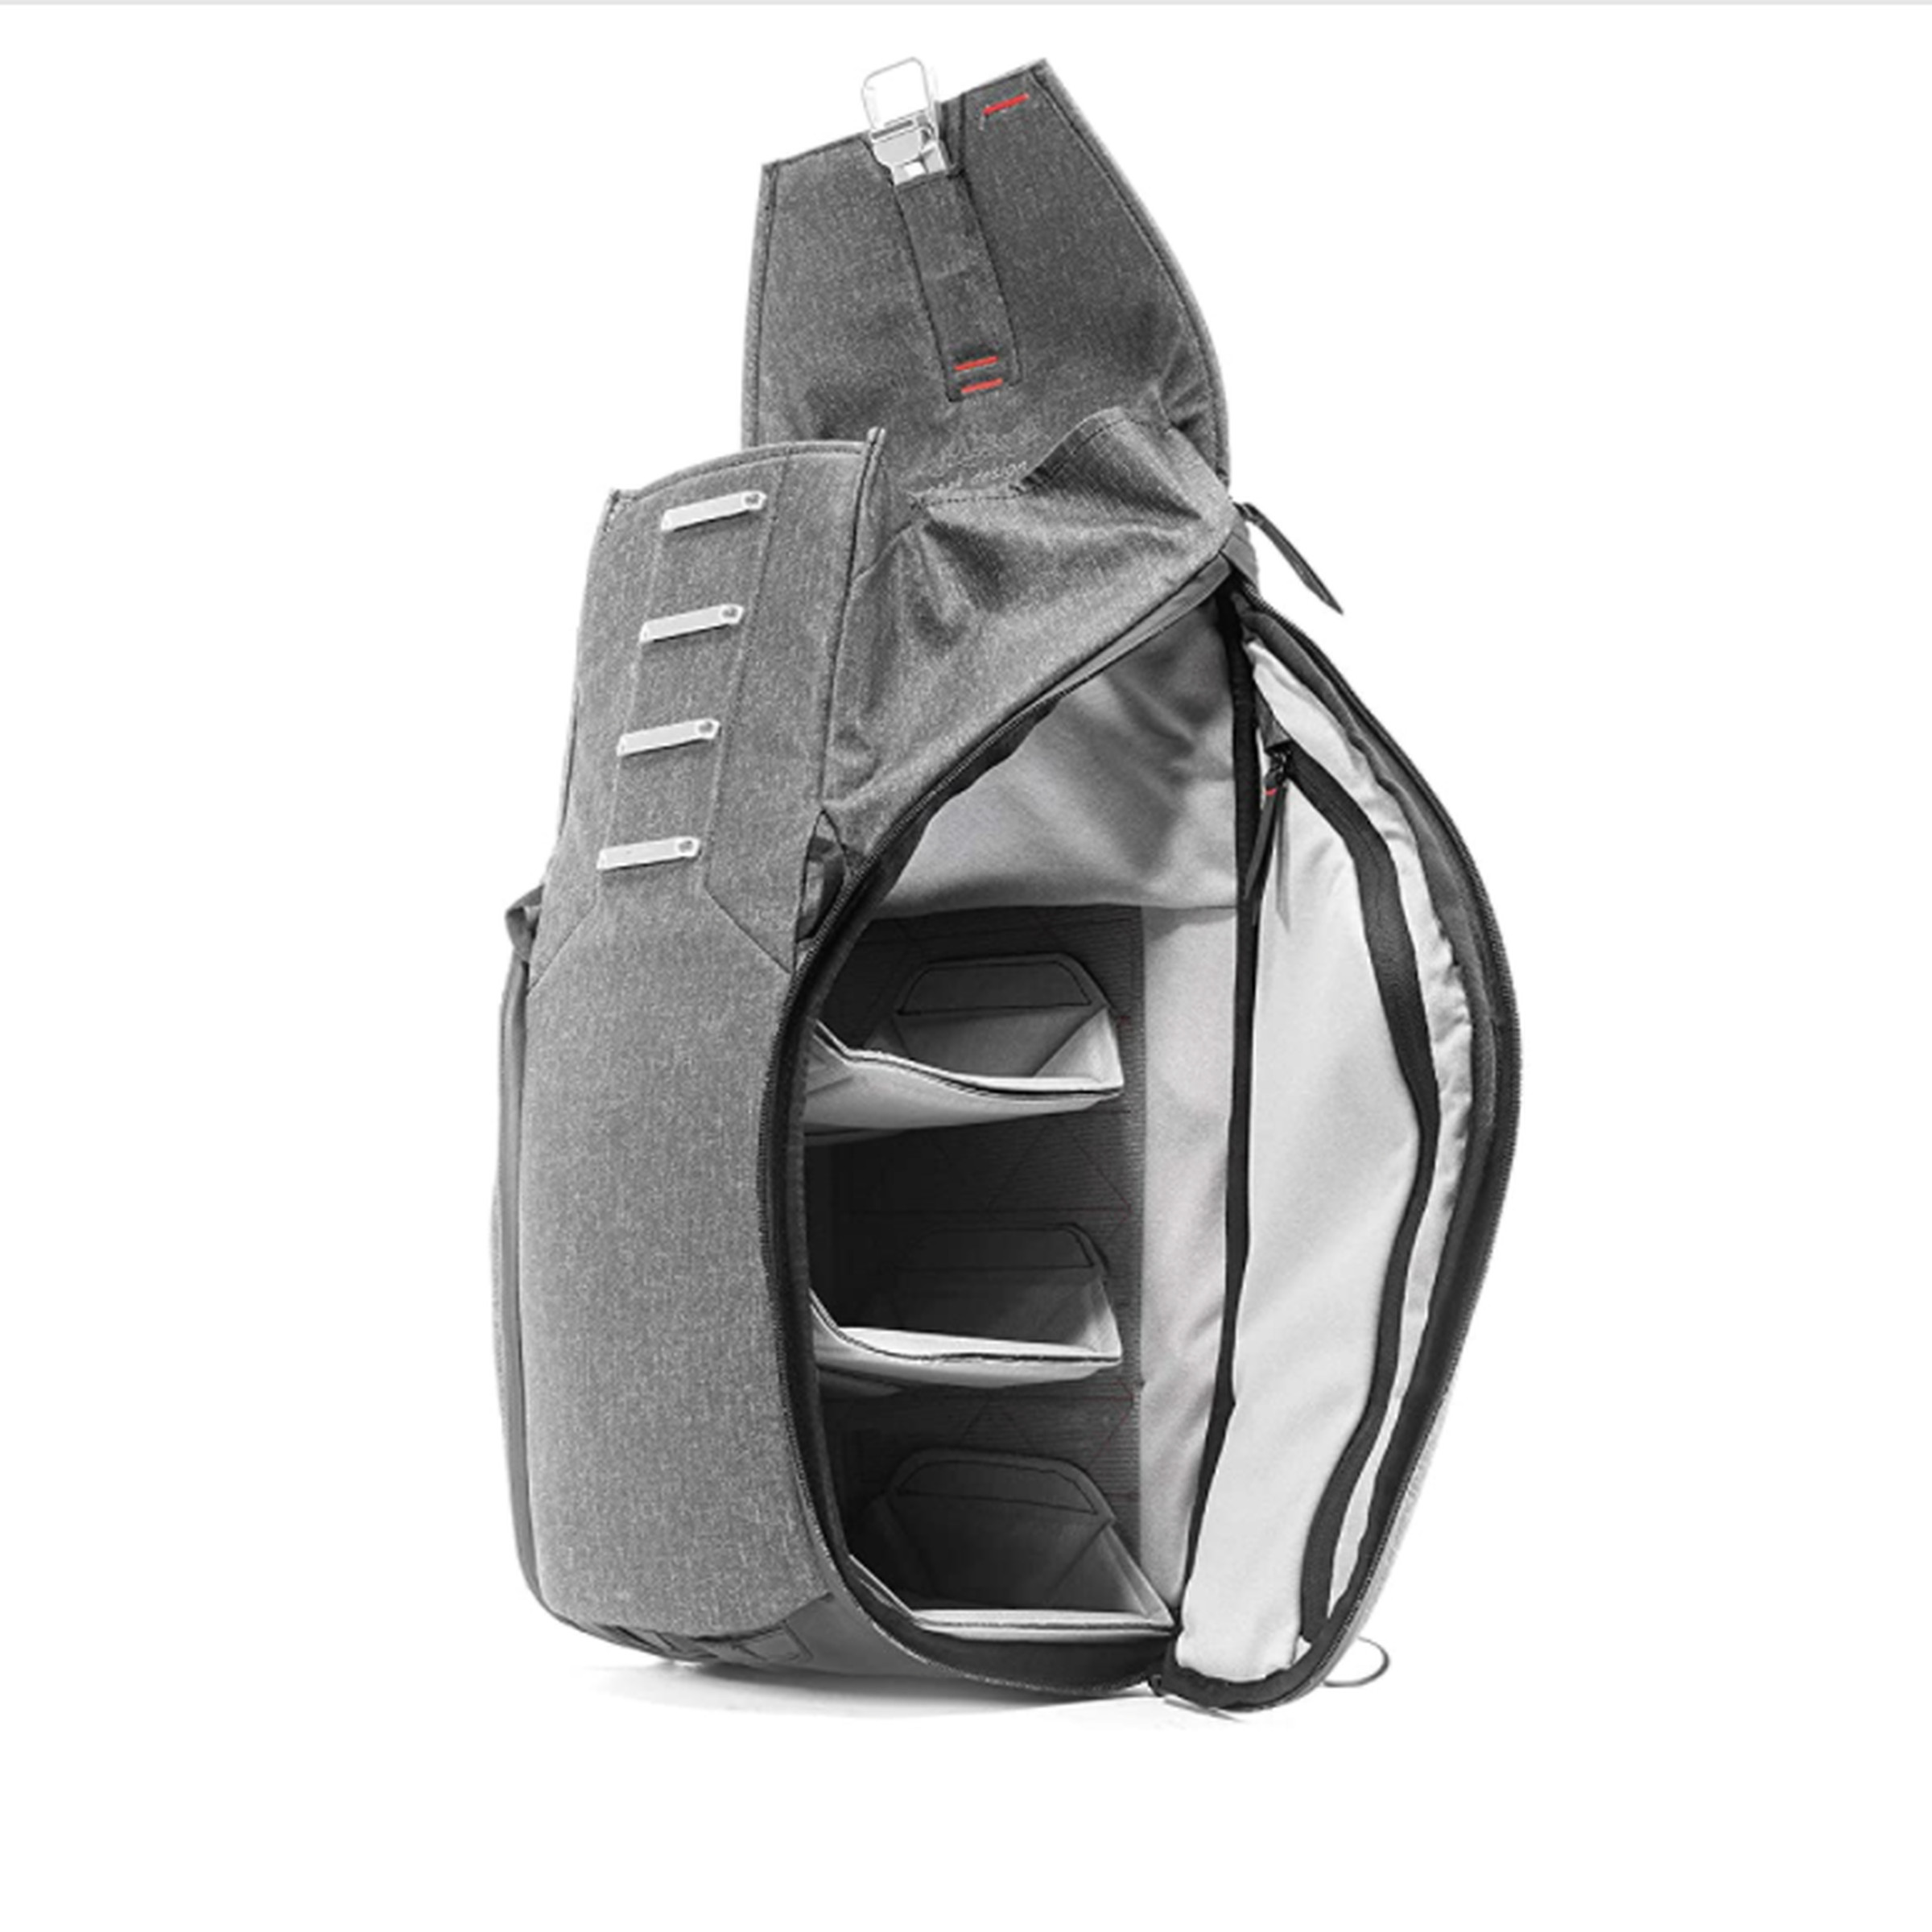 Gray backpack showing open side pocket.